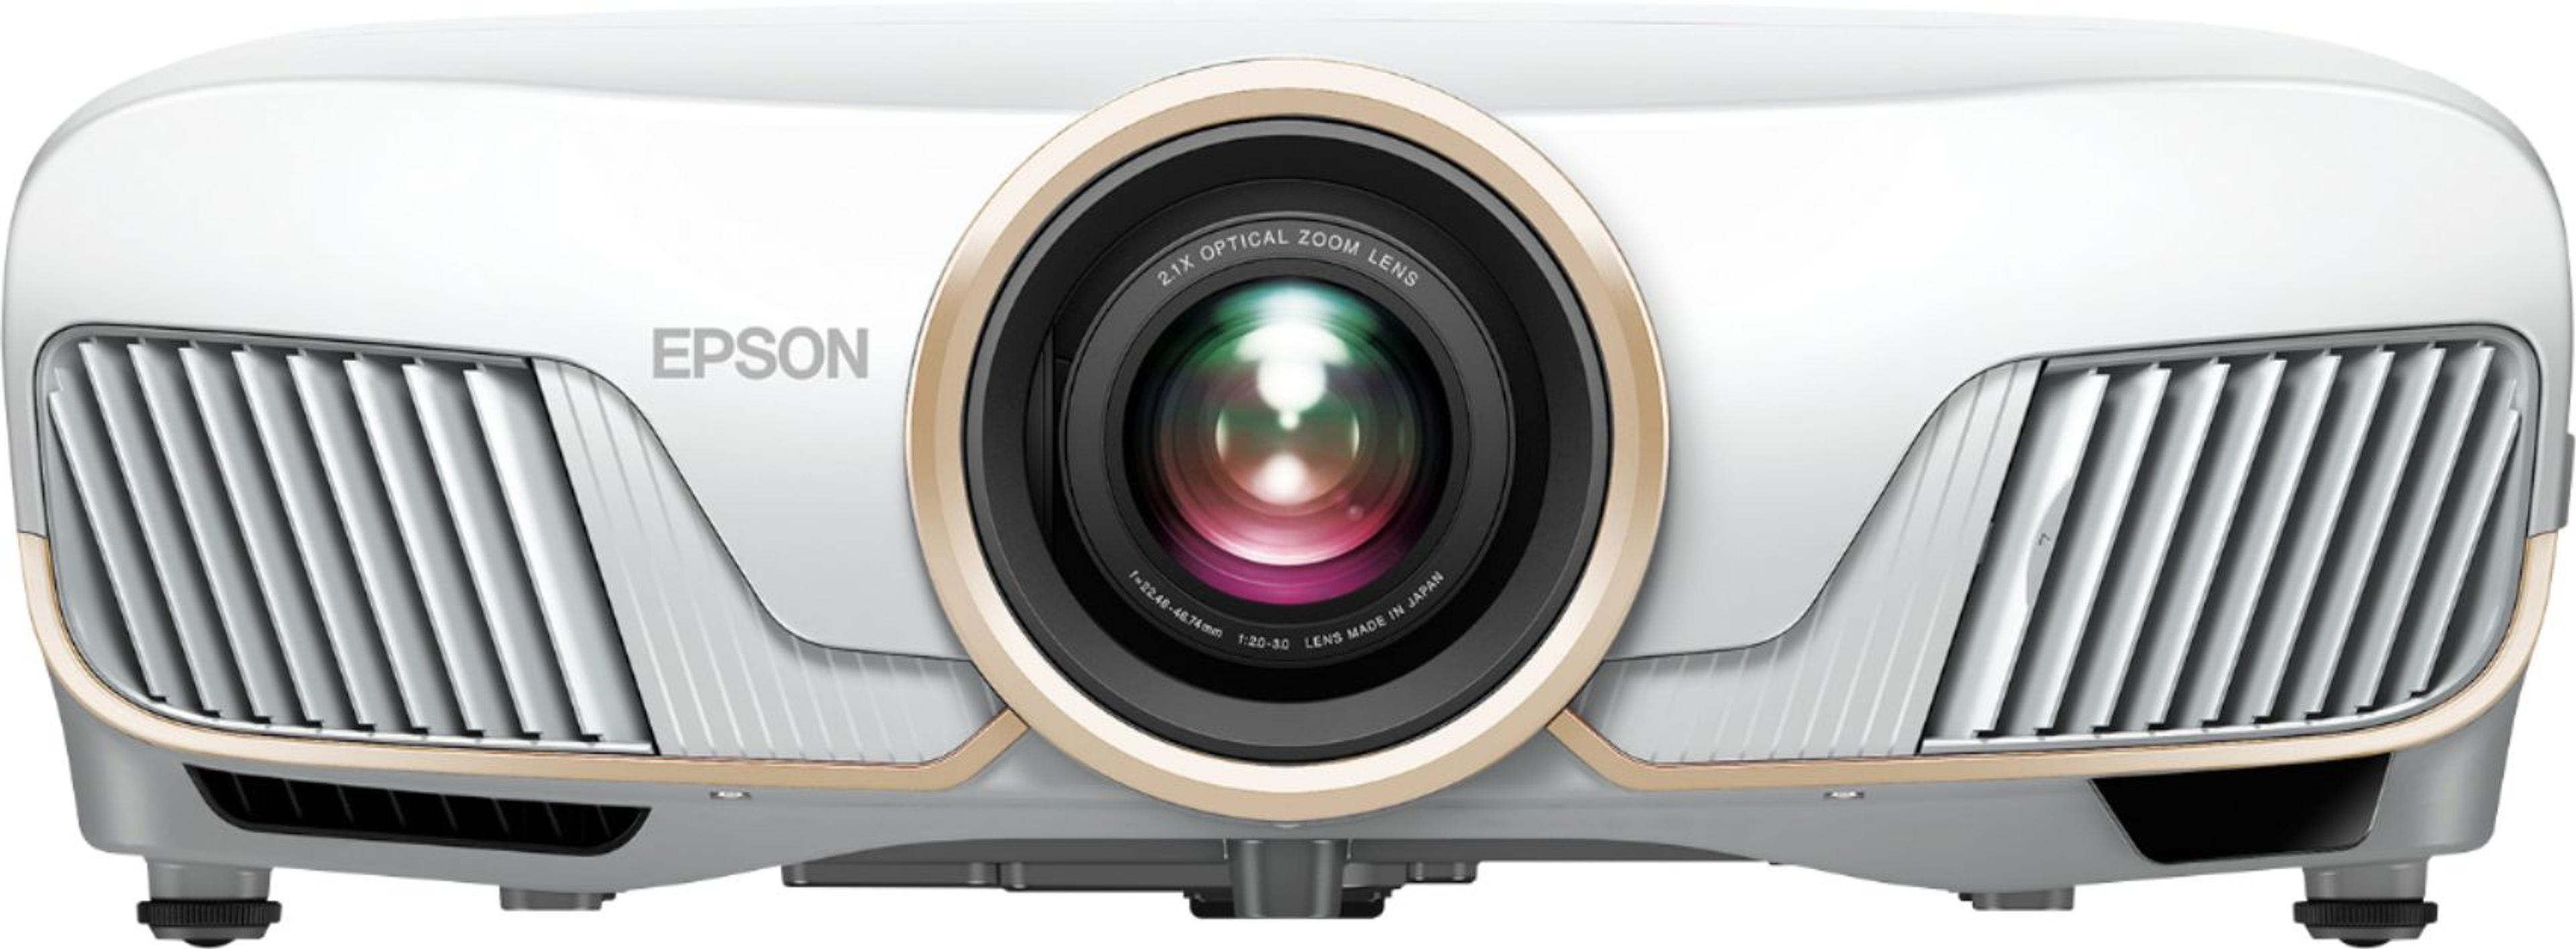 Epson Home Cinema 5050UB 4K PRO-UHD 3-Chip HDR Projector, 2600 lumens, UltraBlack, HDMI, Motorized Lens, Movies, Gaming White EPSON 5050UB PROJ V11H930020 - Best Buy